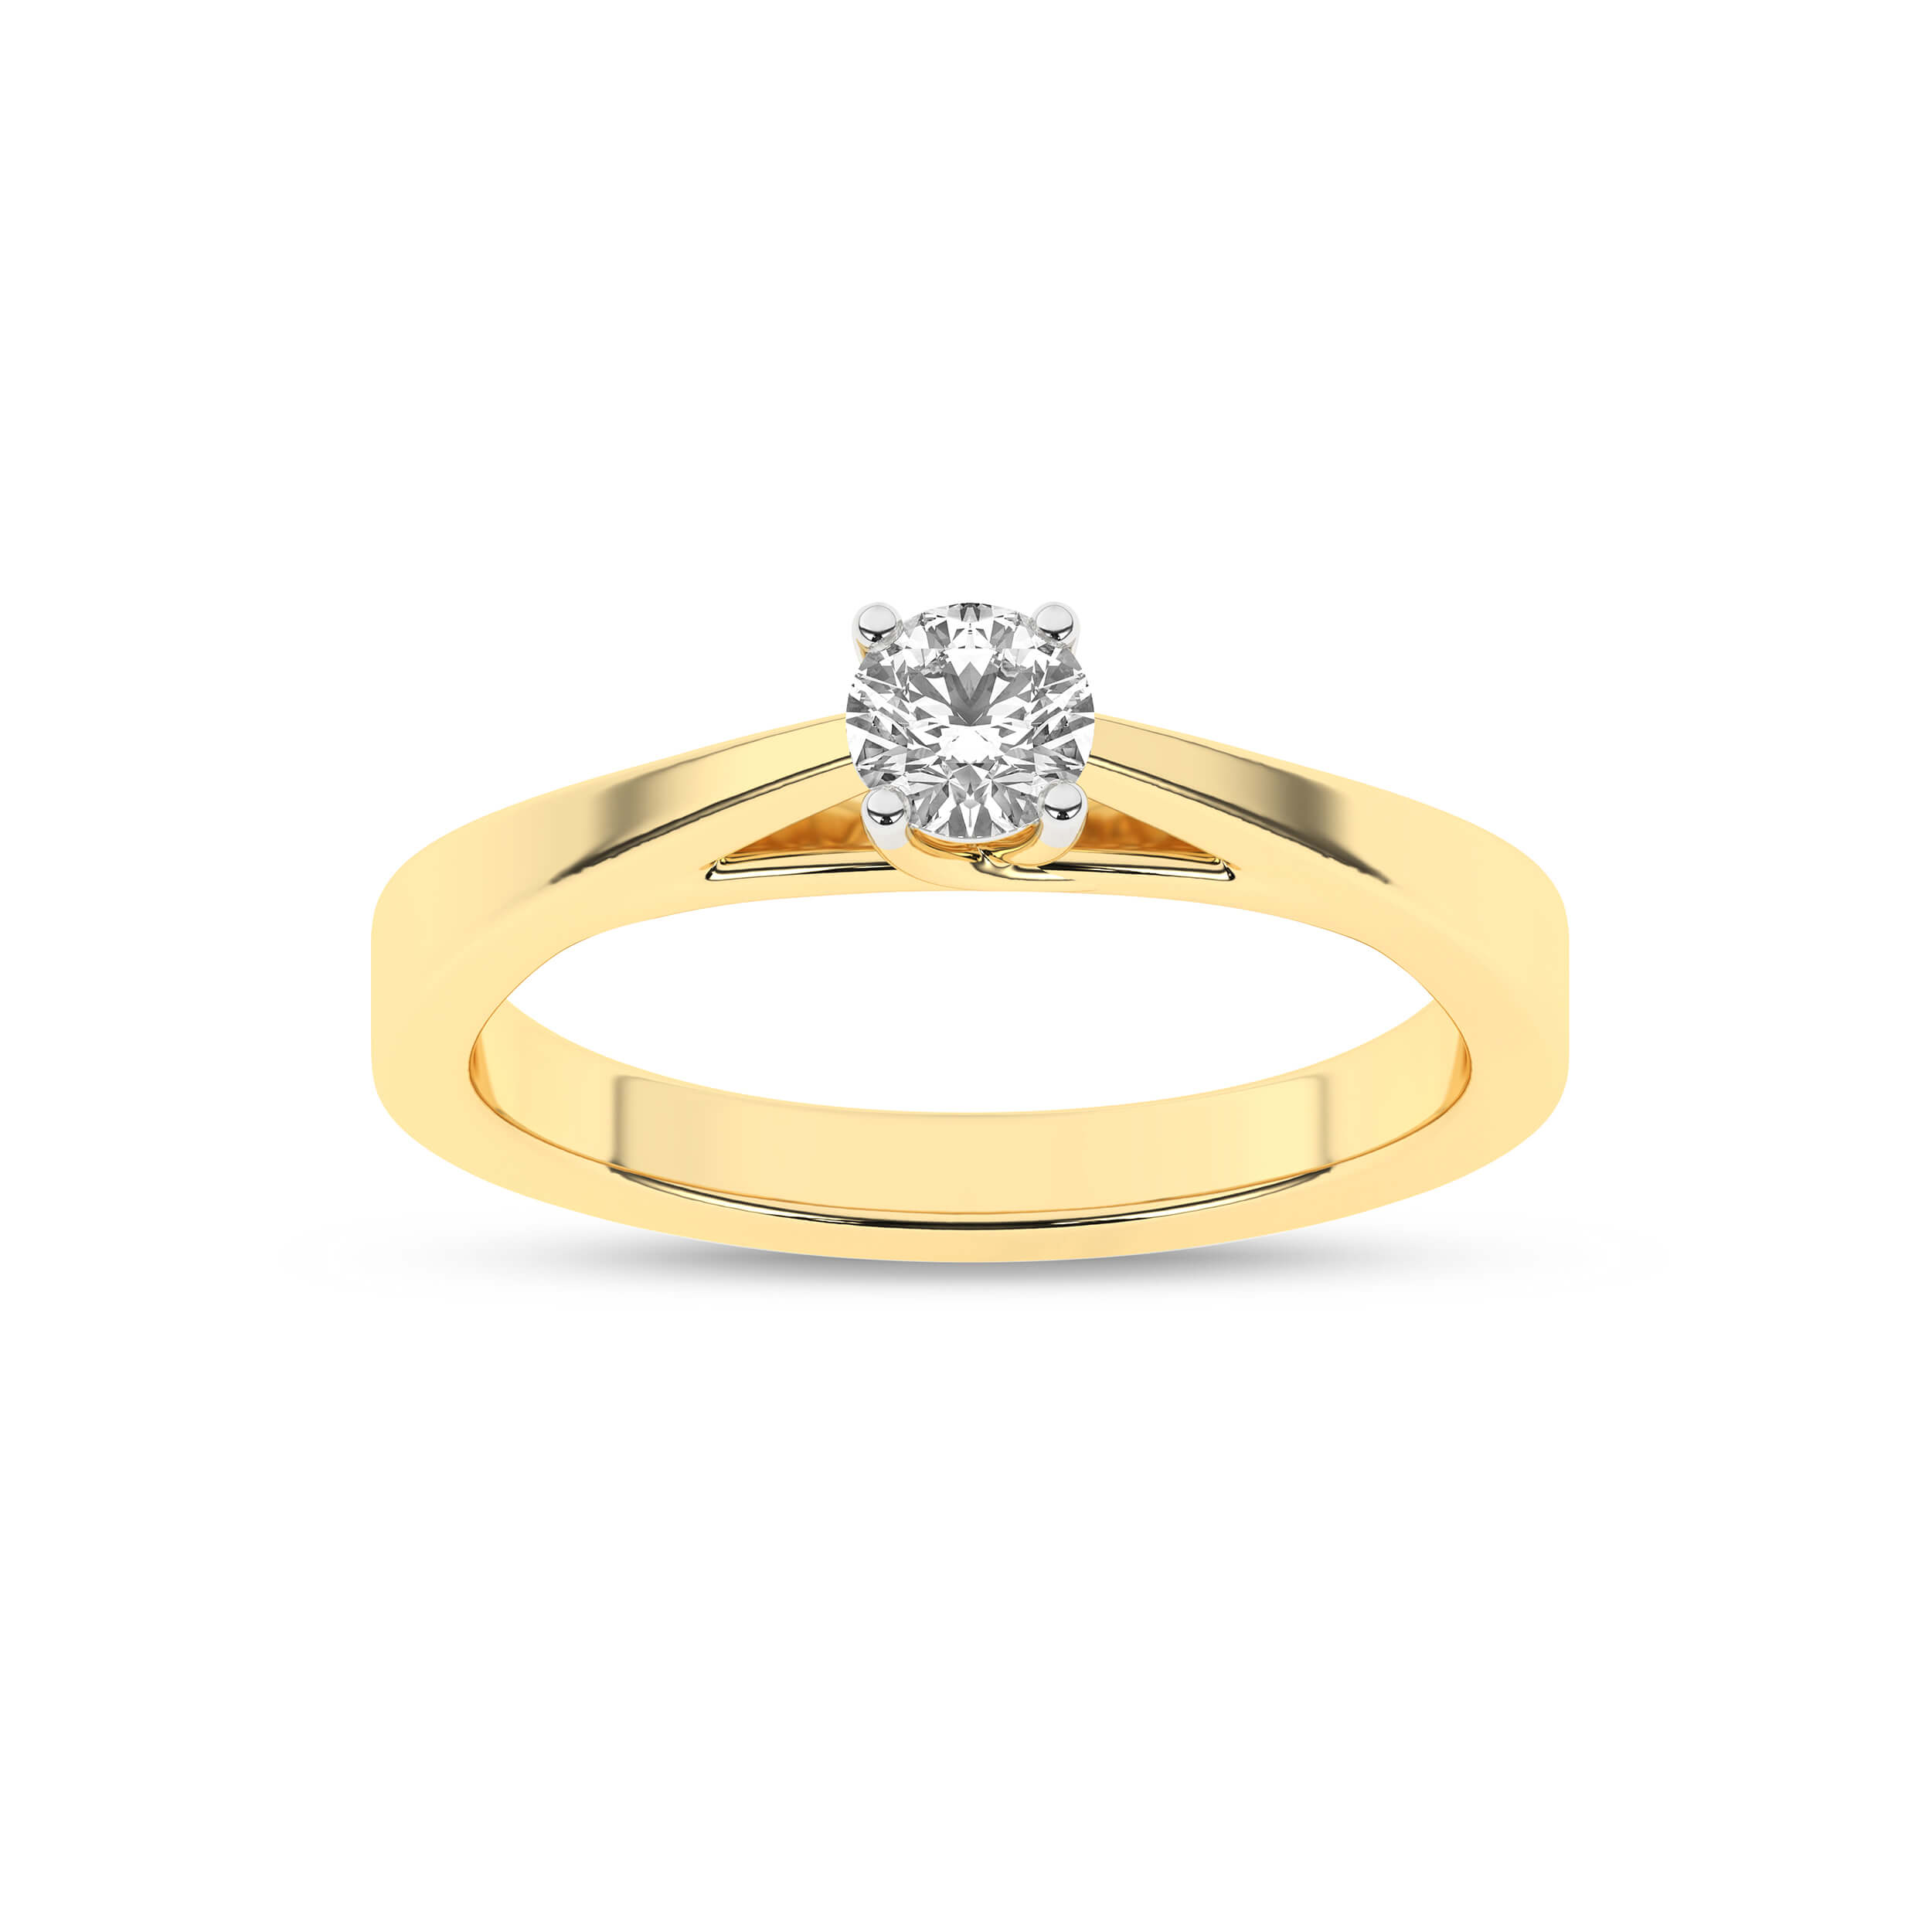 Inel de logodna din Aur Galben 14K cu Diamant 0.25Ct, articol RS1234, previzualizare foto 3